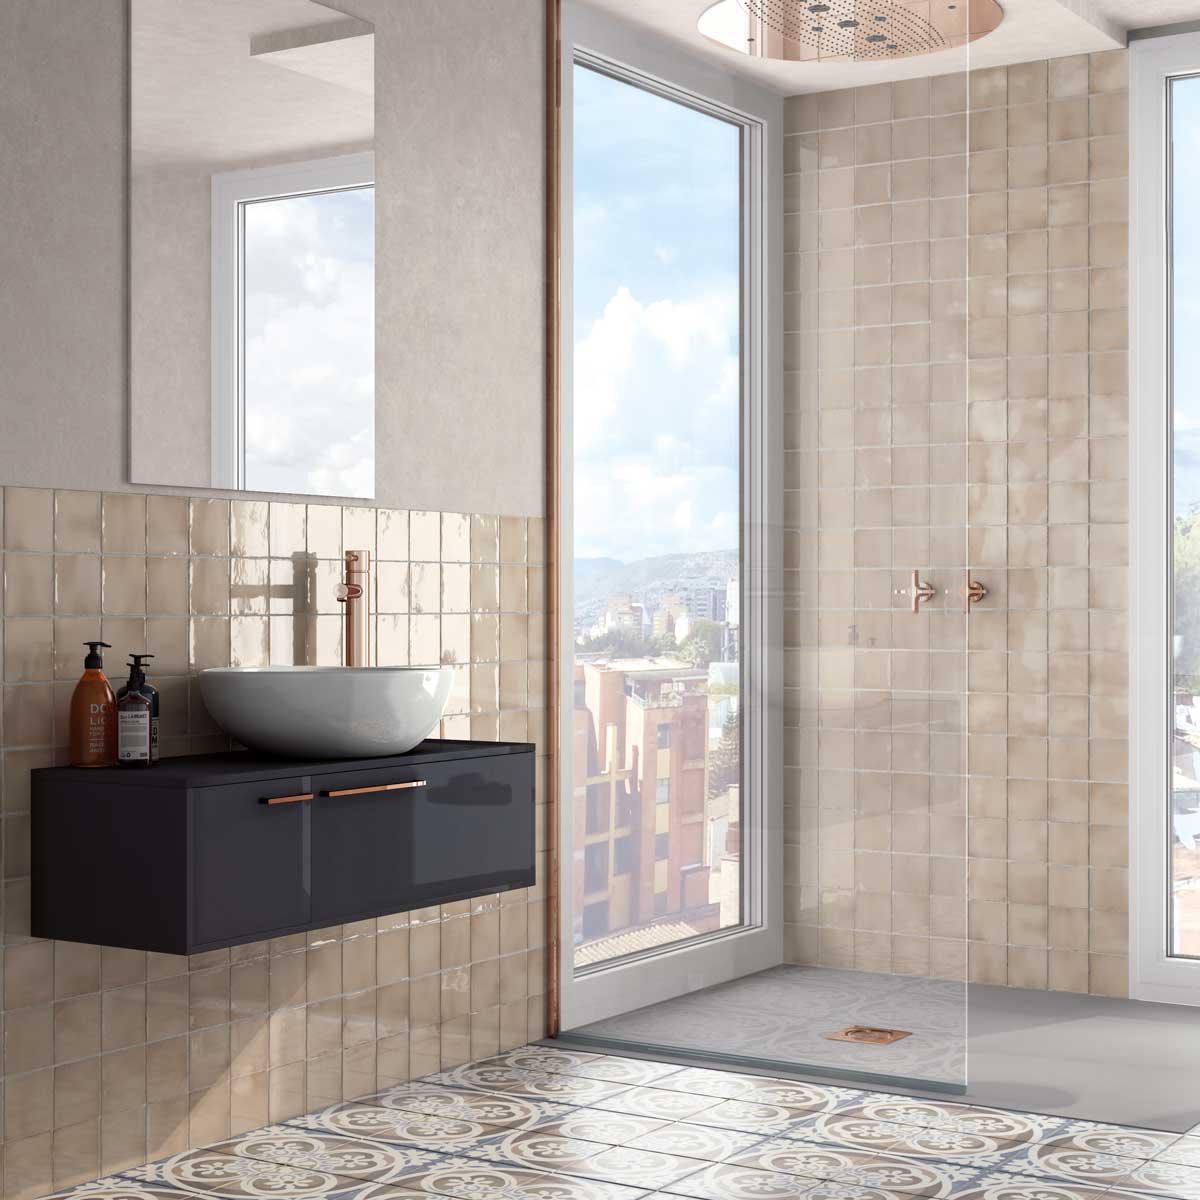 Modern bathroom with beige glazed ceramic tiles